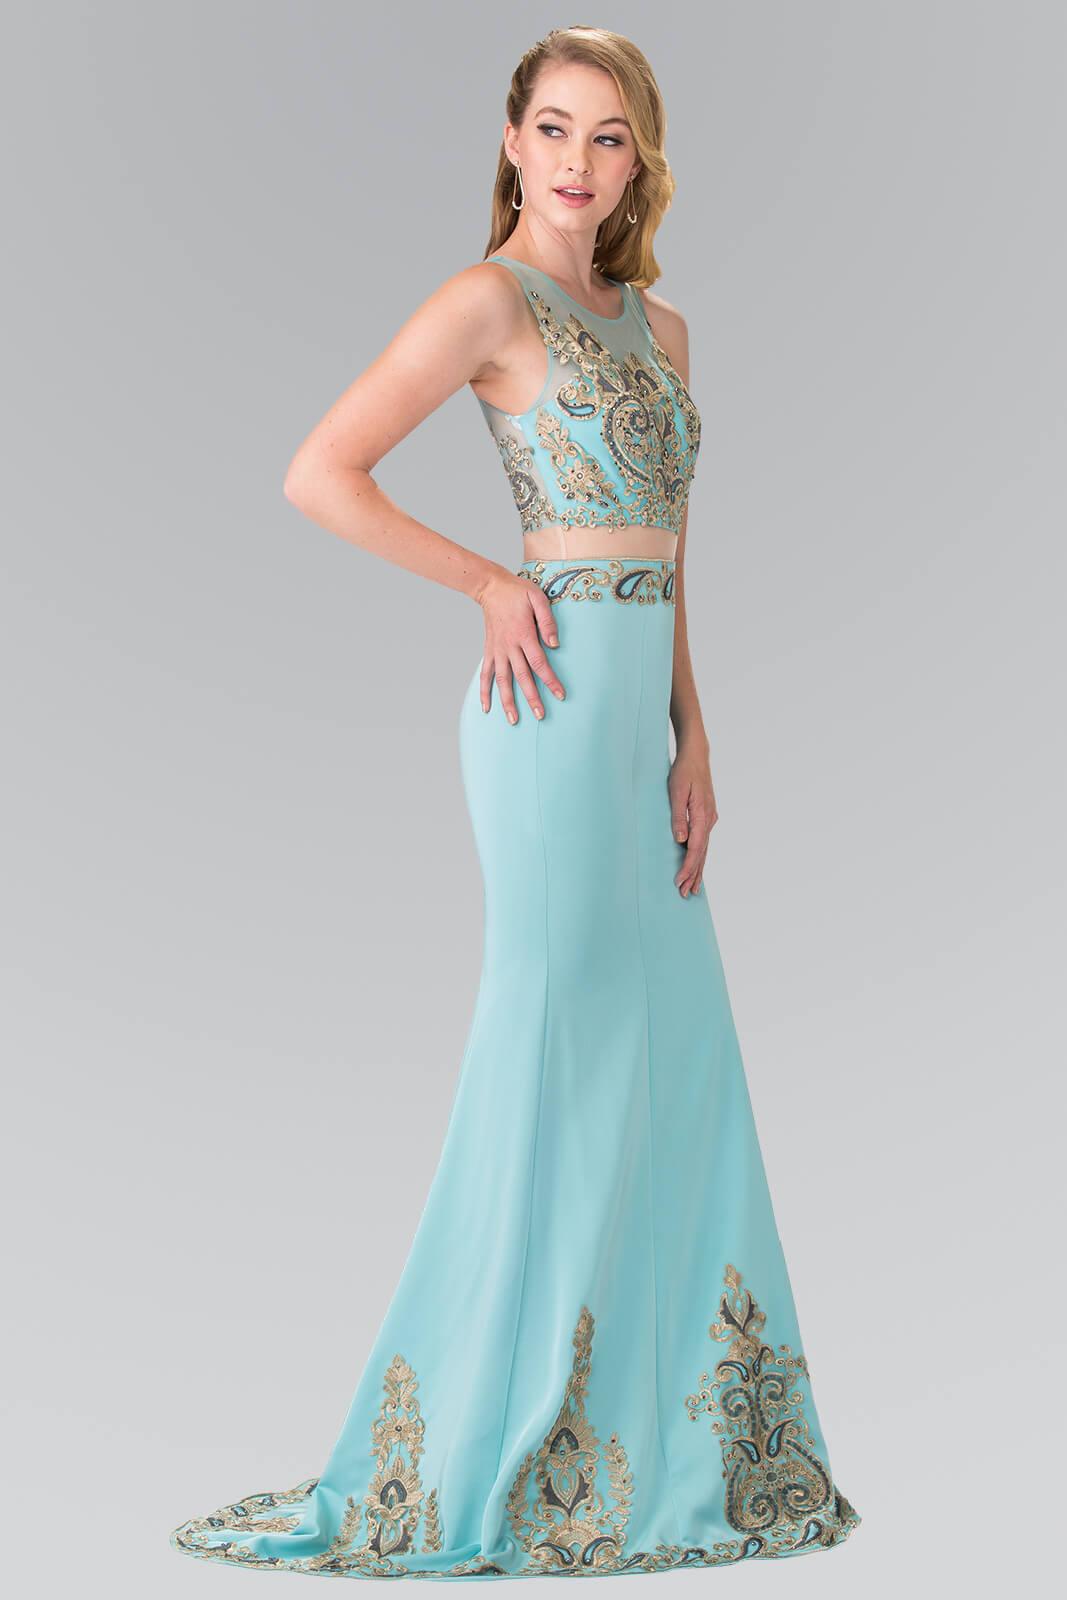 Long Formal Sleeveless Mock Two Piece Prom Dress - The Dress Outlet Elizabeth K